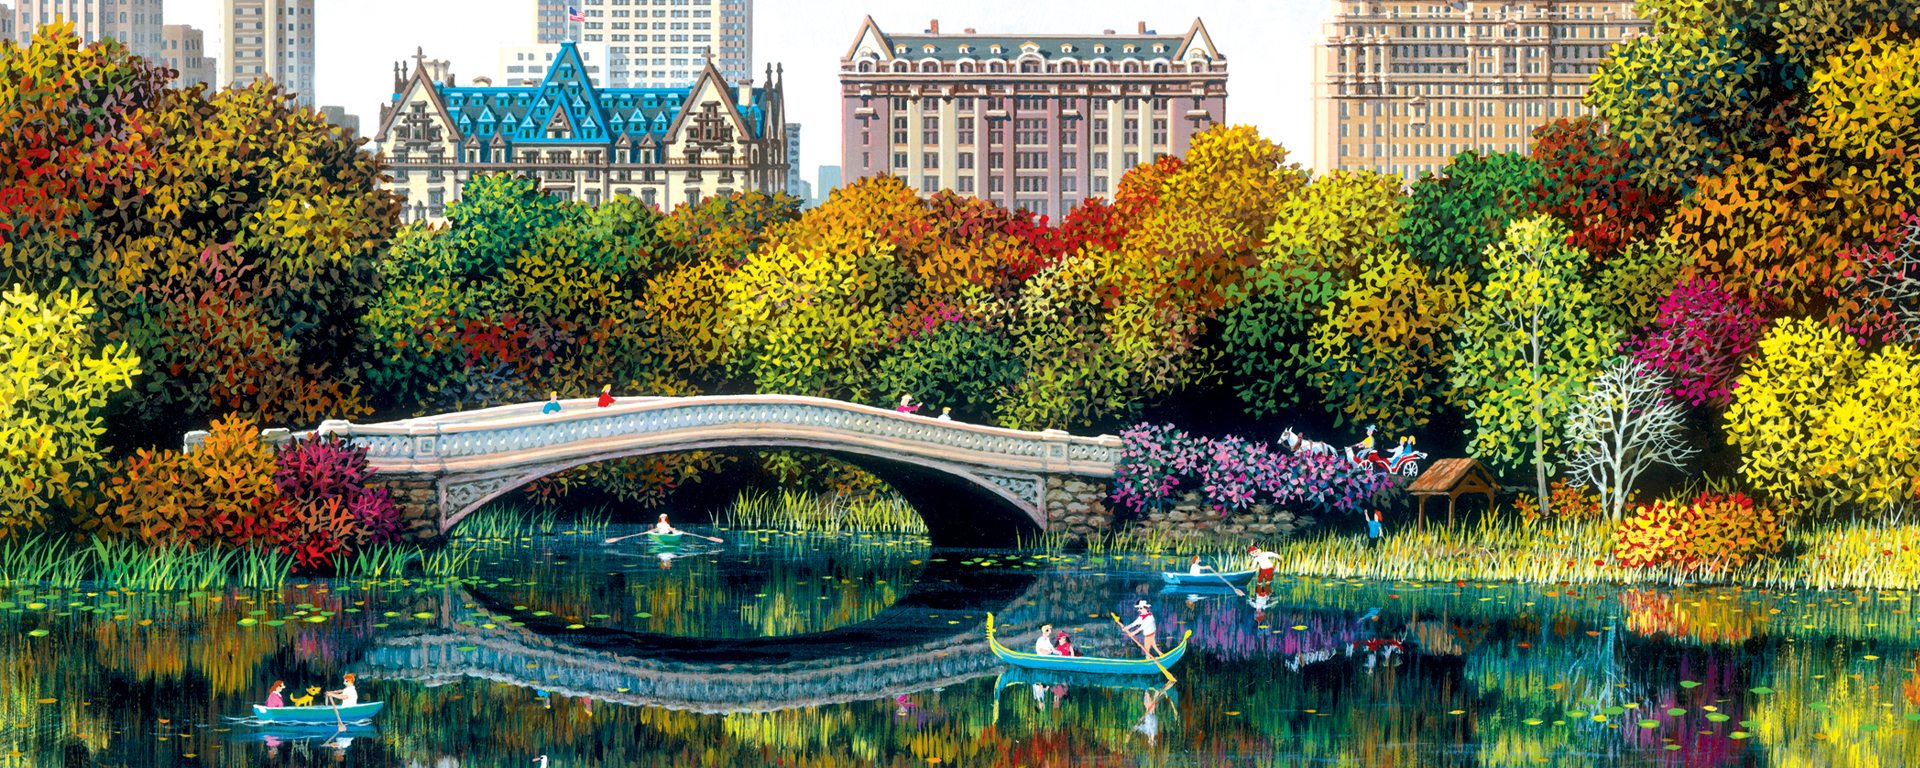 new york city central park bow bridge in fall